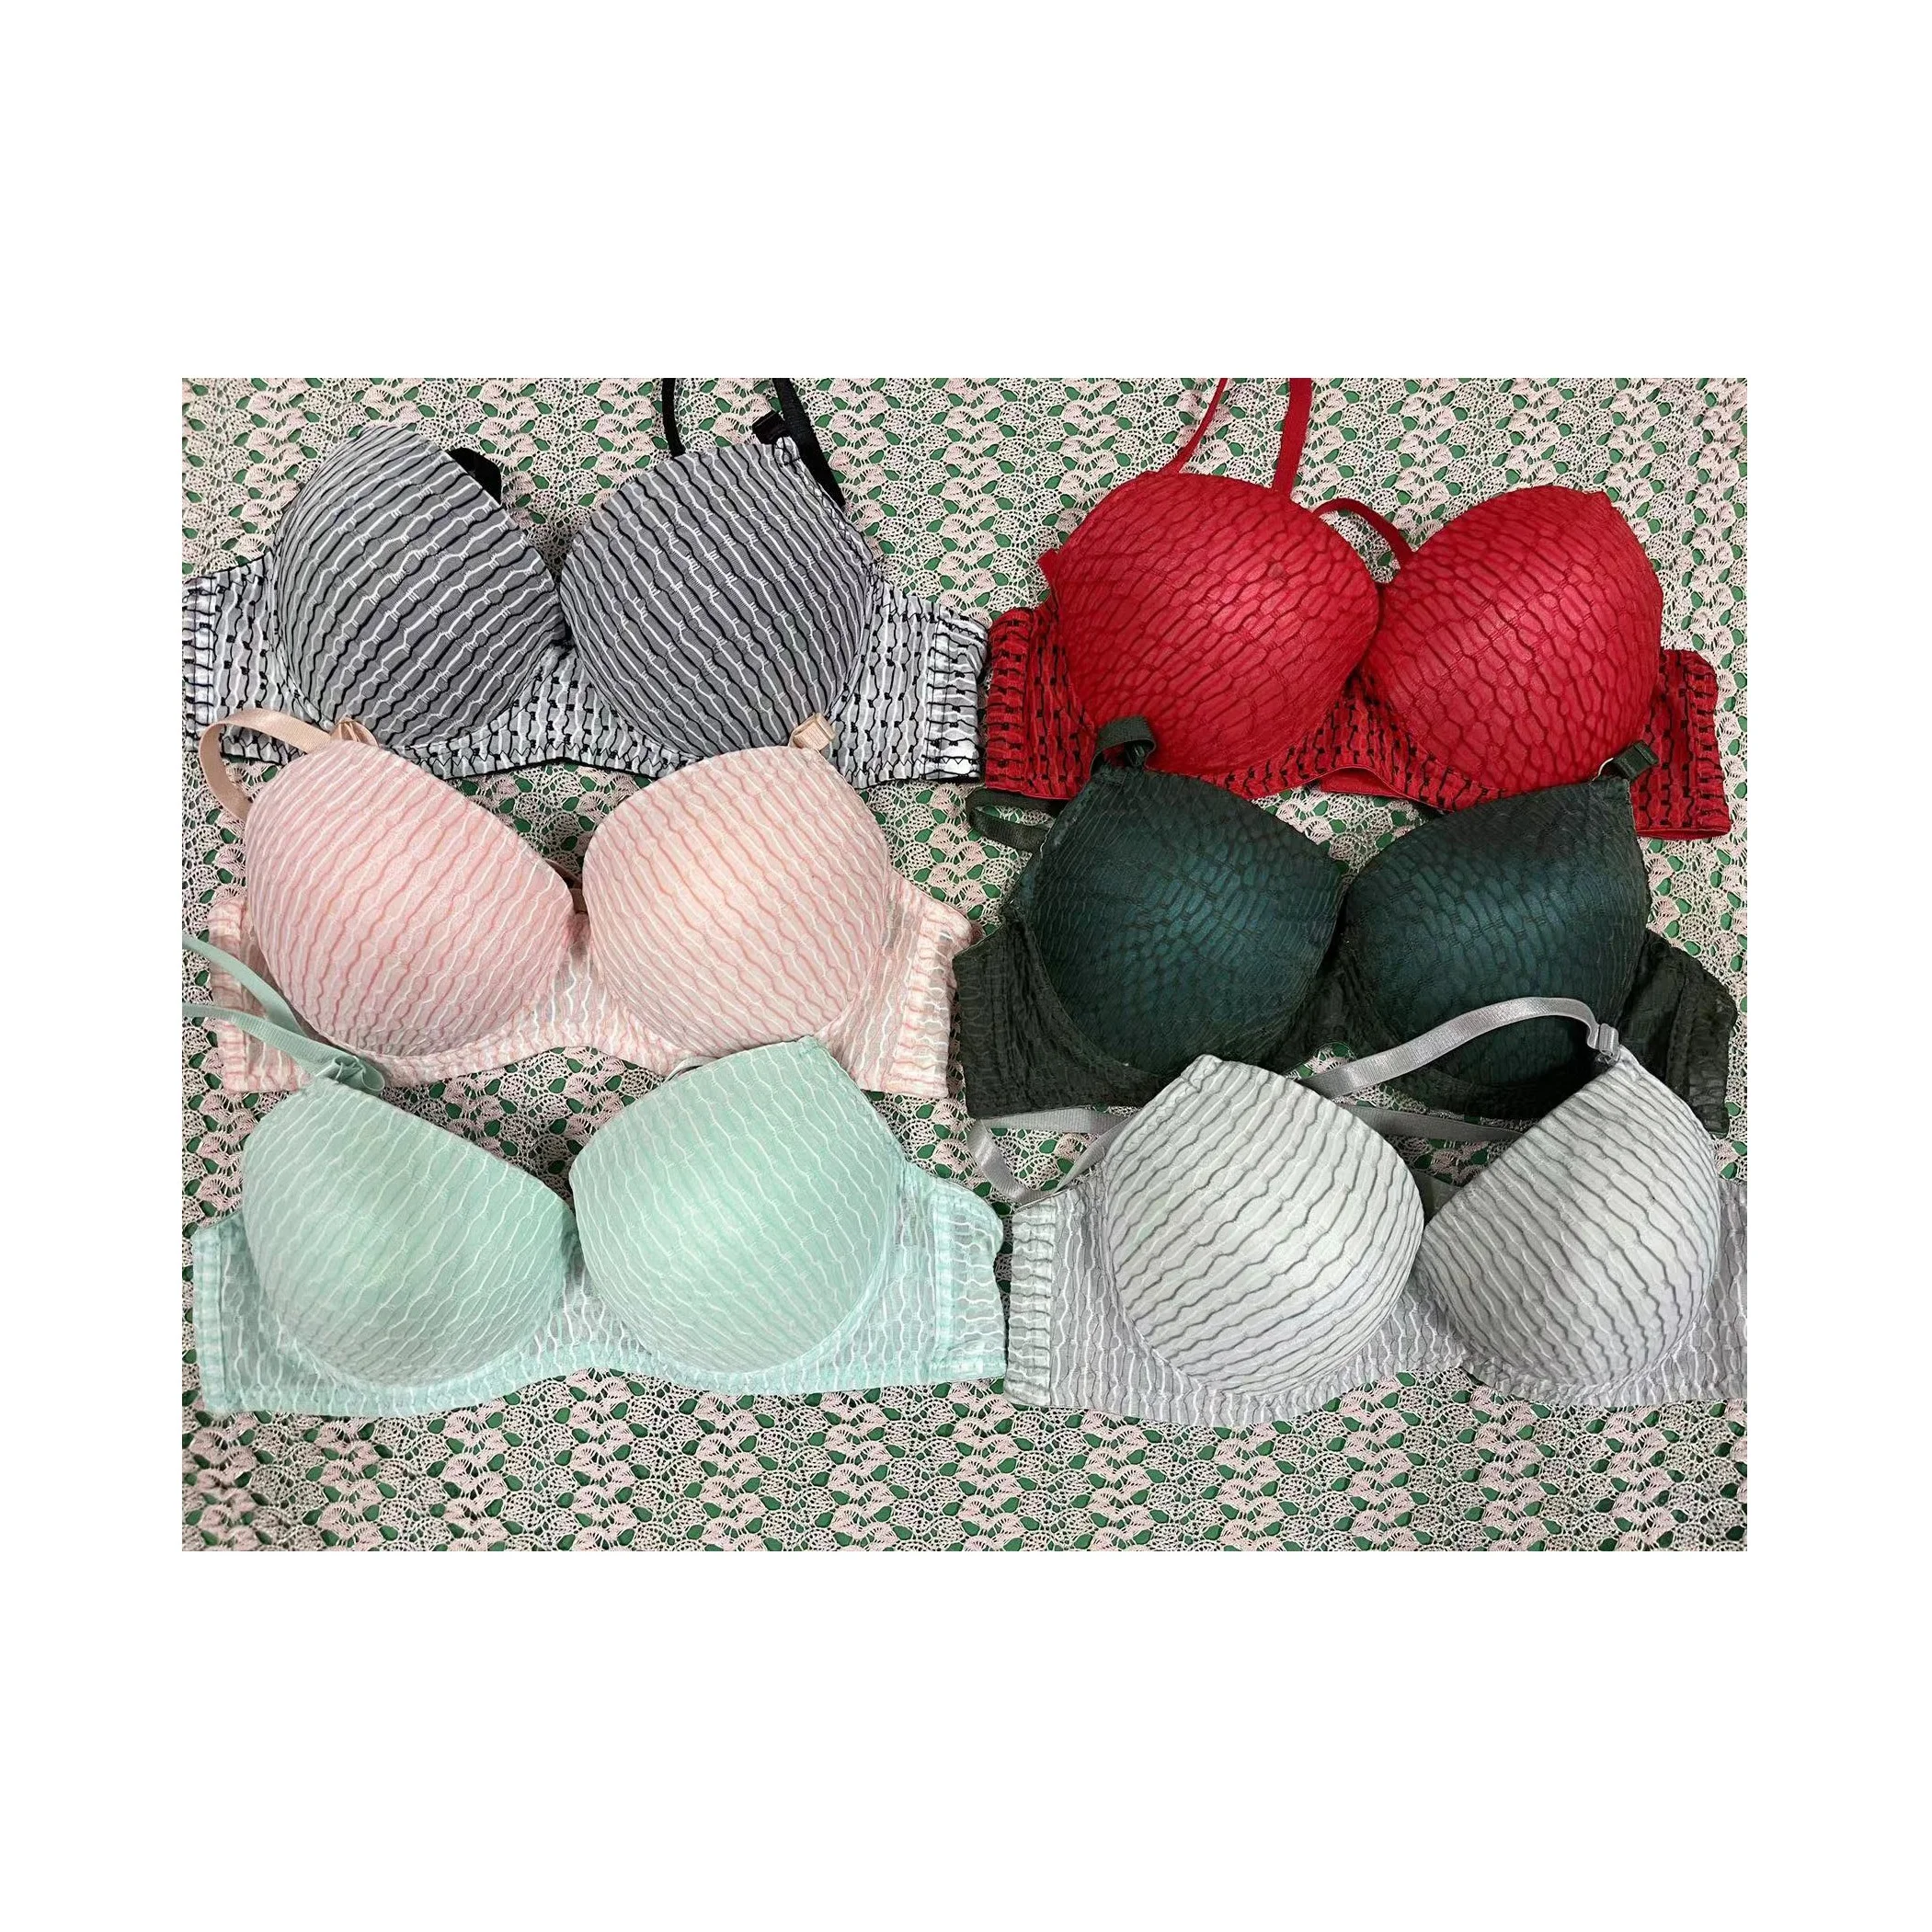 

QJZ007 cheap price fast sale push up young lingerie adjustable bra, Mix color